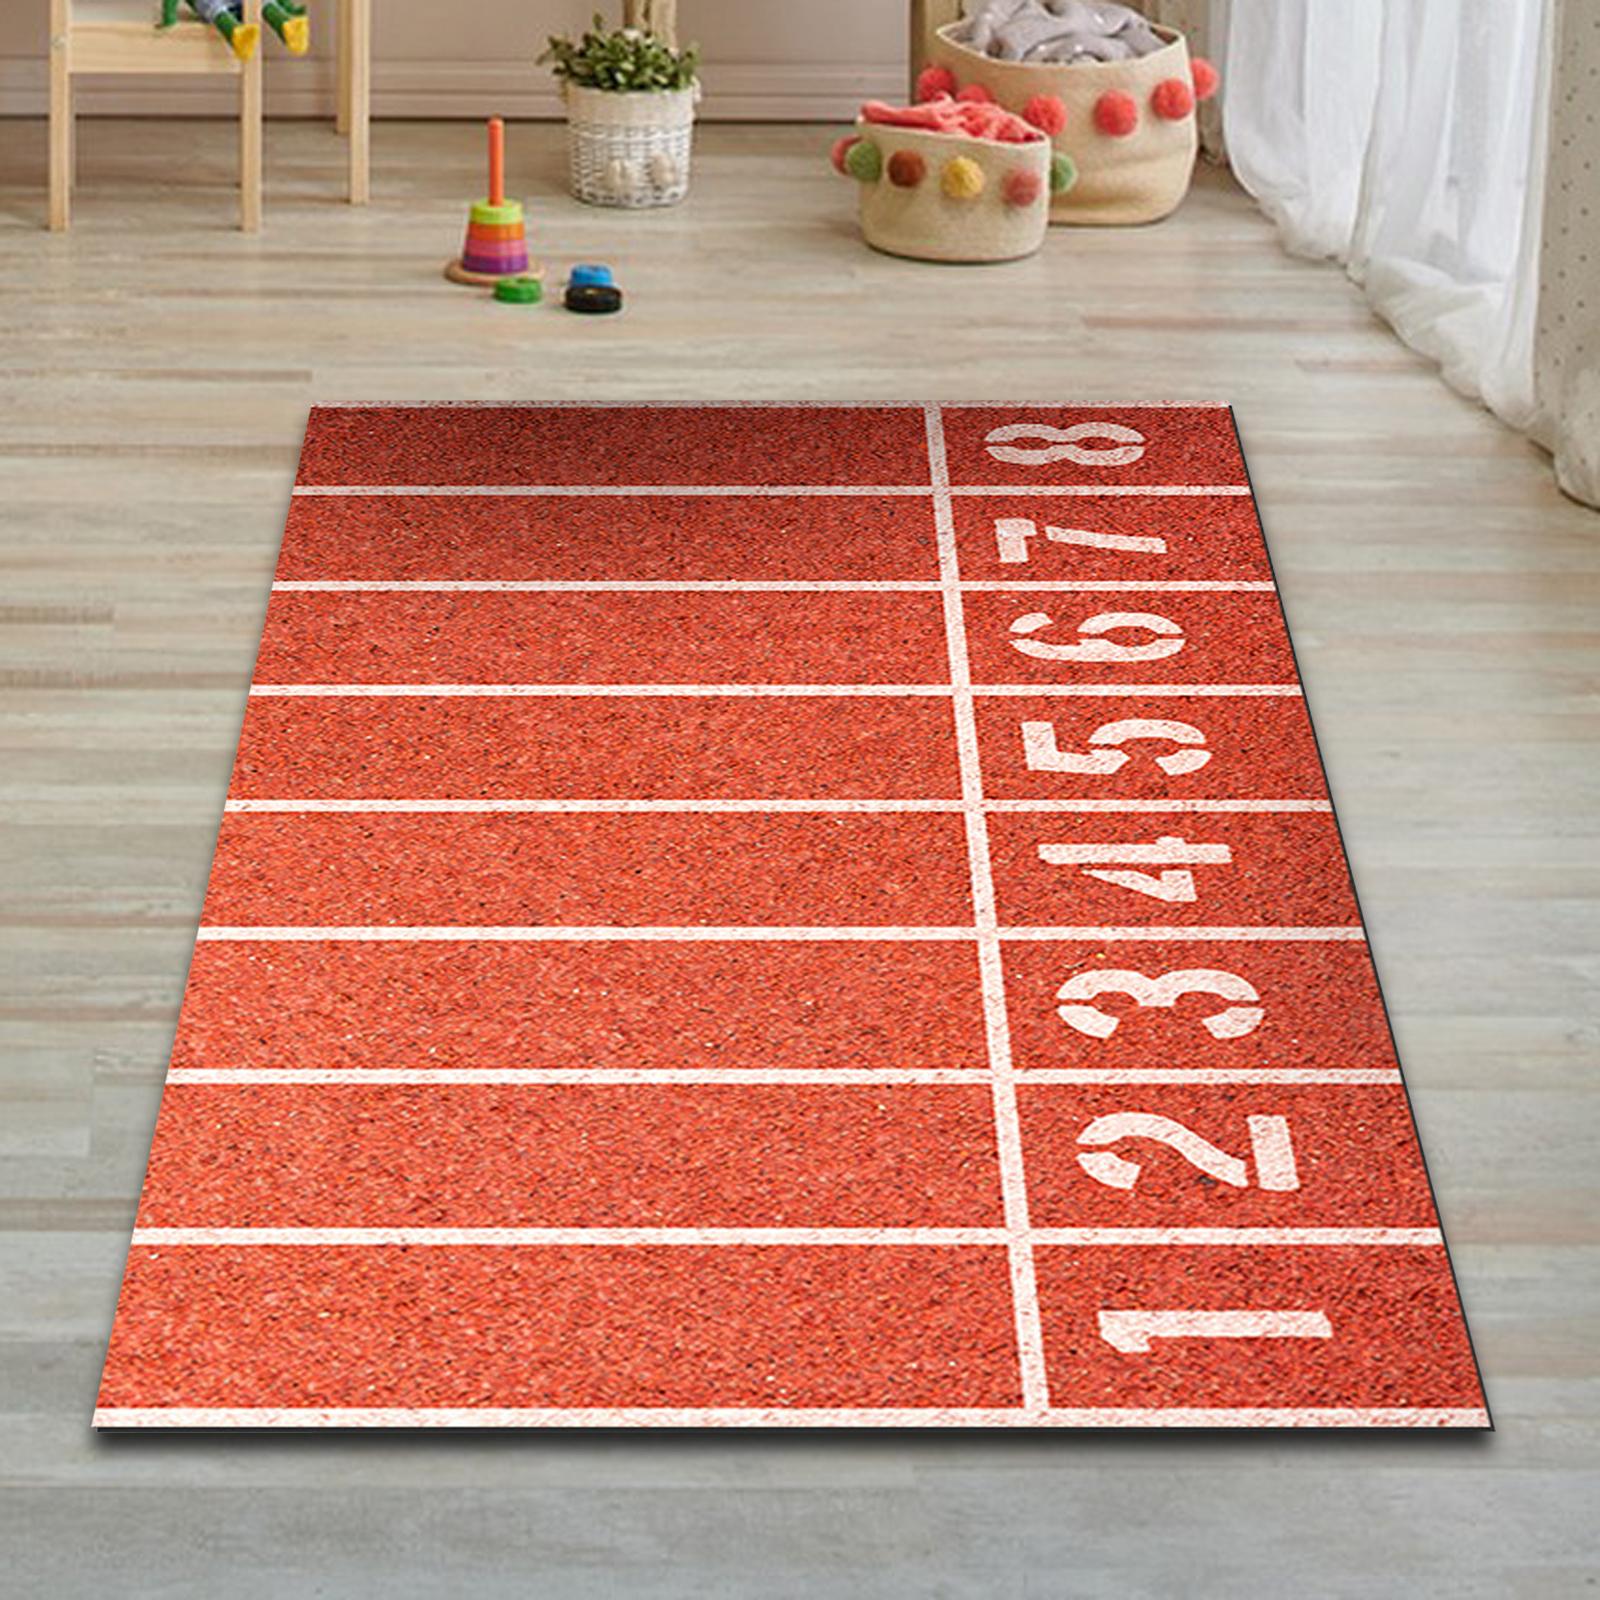 Sports Field Rugs Kids Play Mat Blanket Carpets 60cmx90cm Red